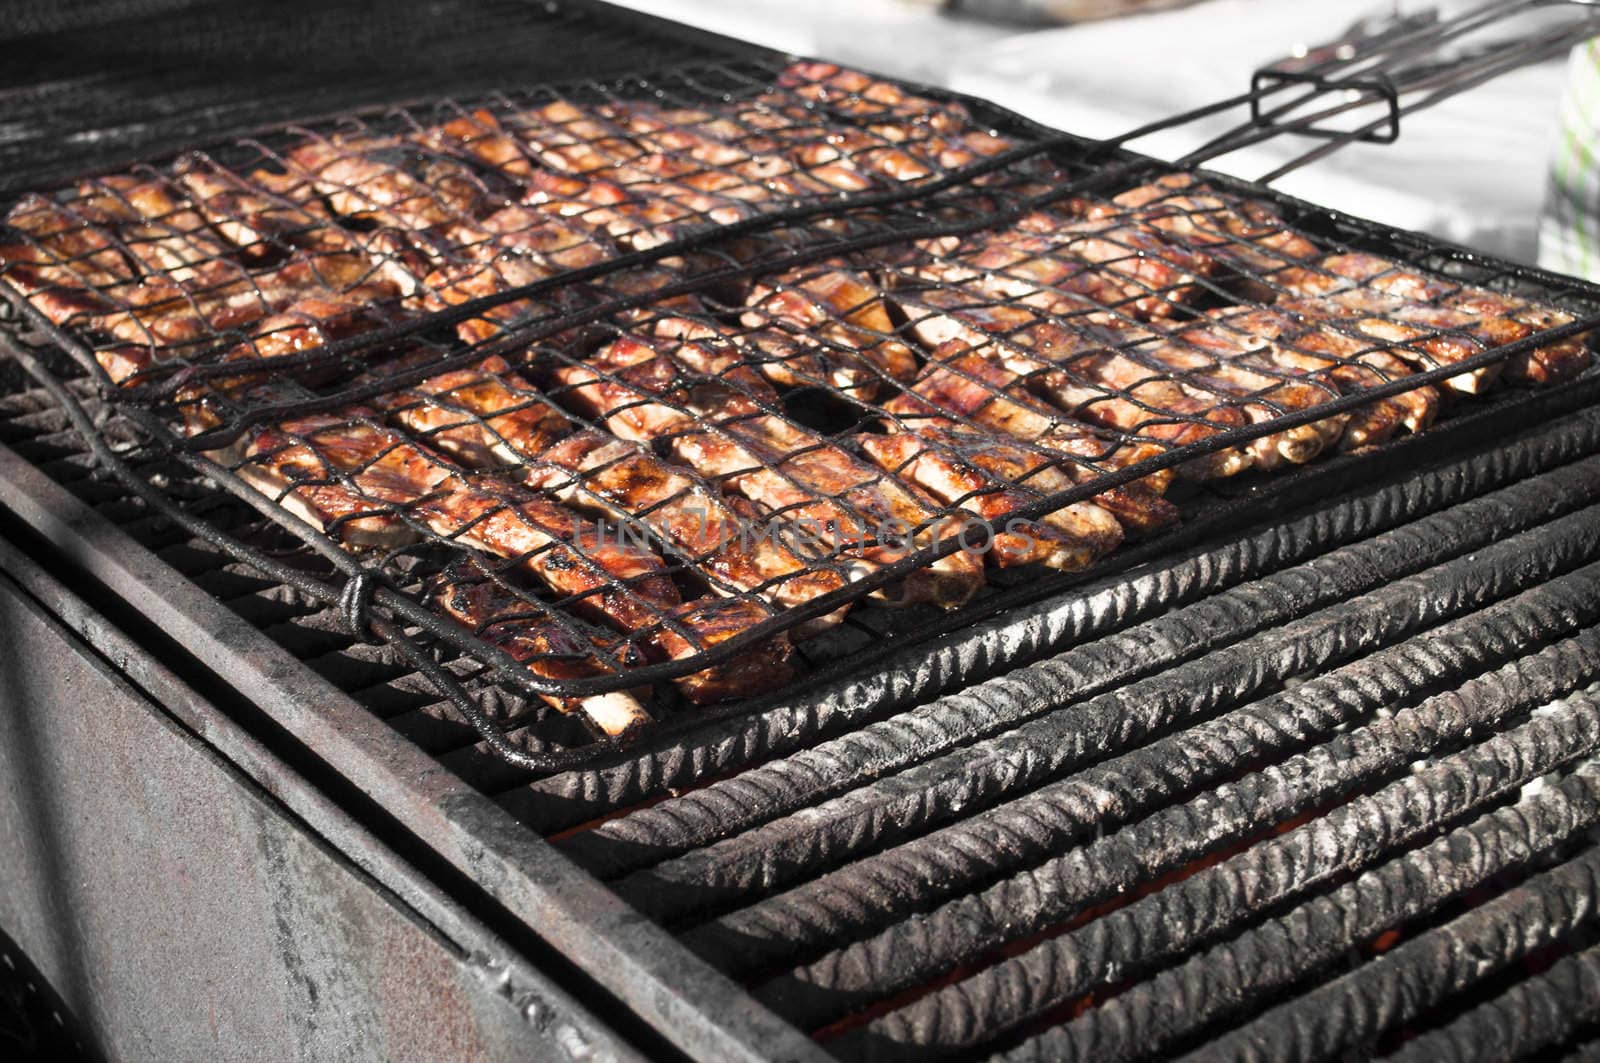 Meat pork on a italian festival barbecue grill